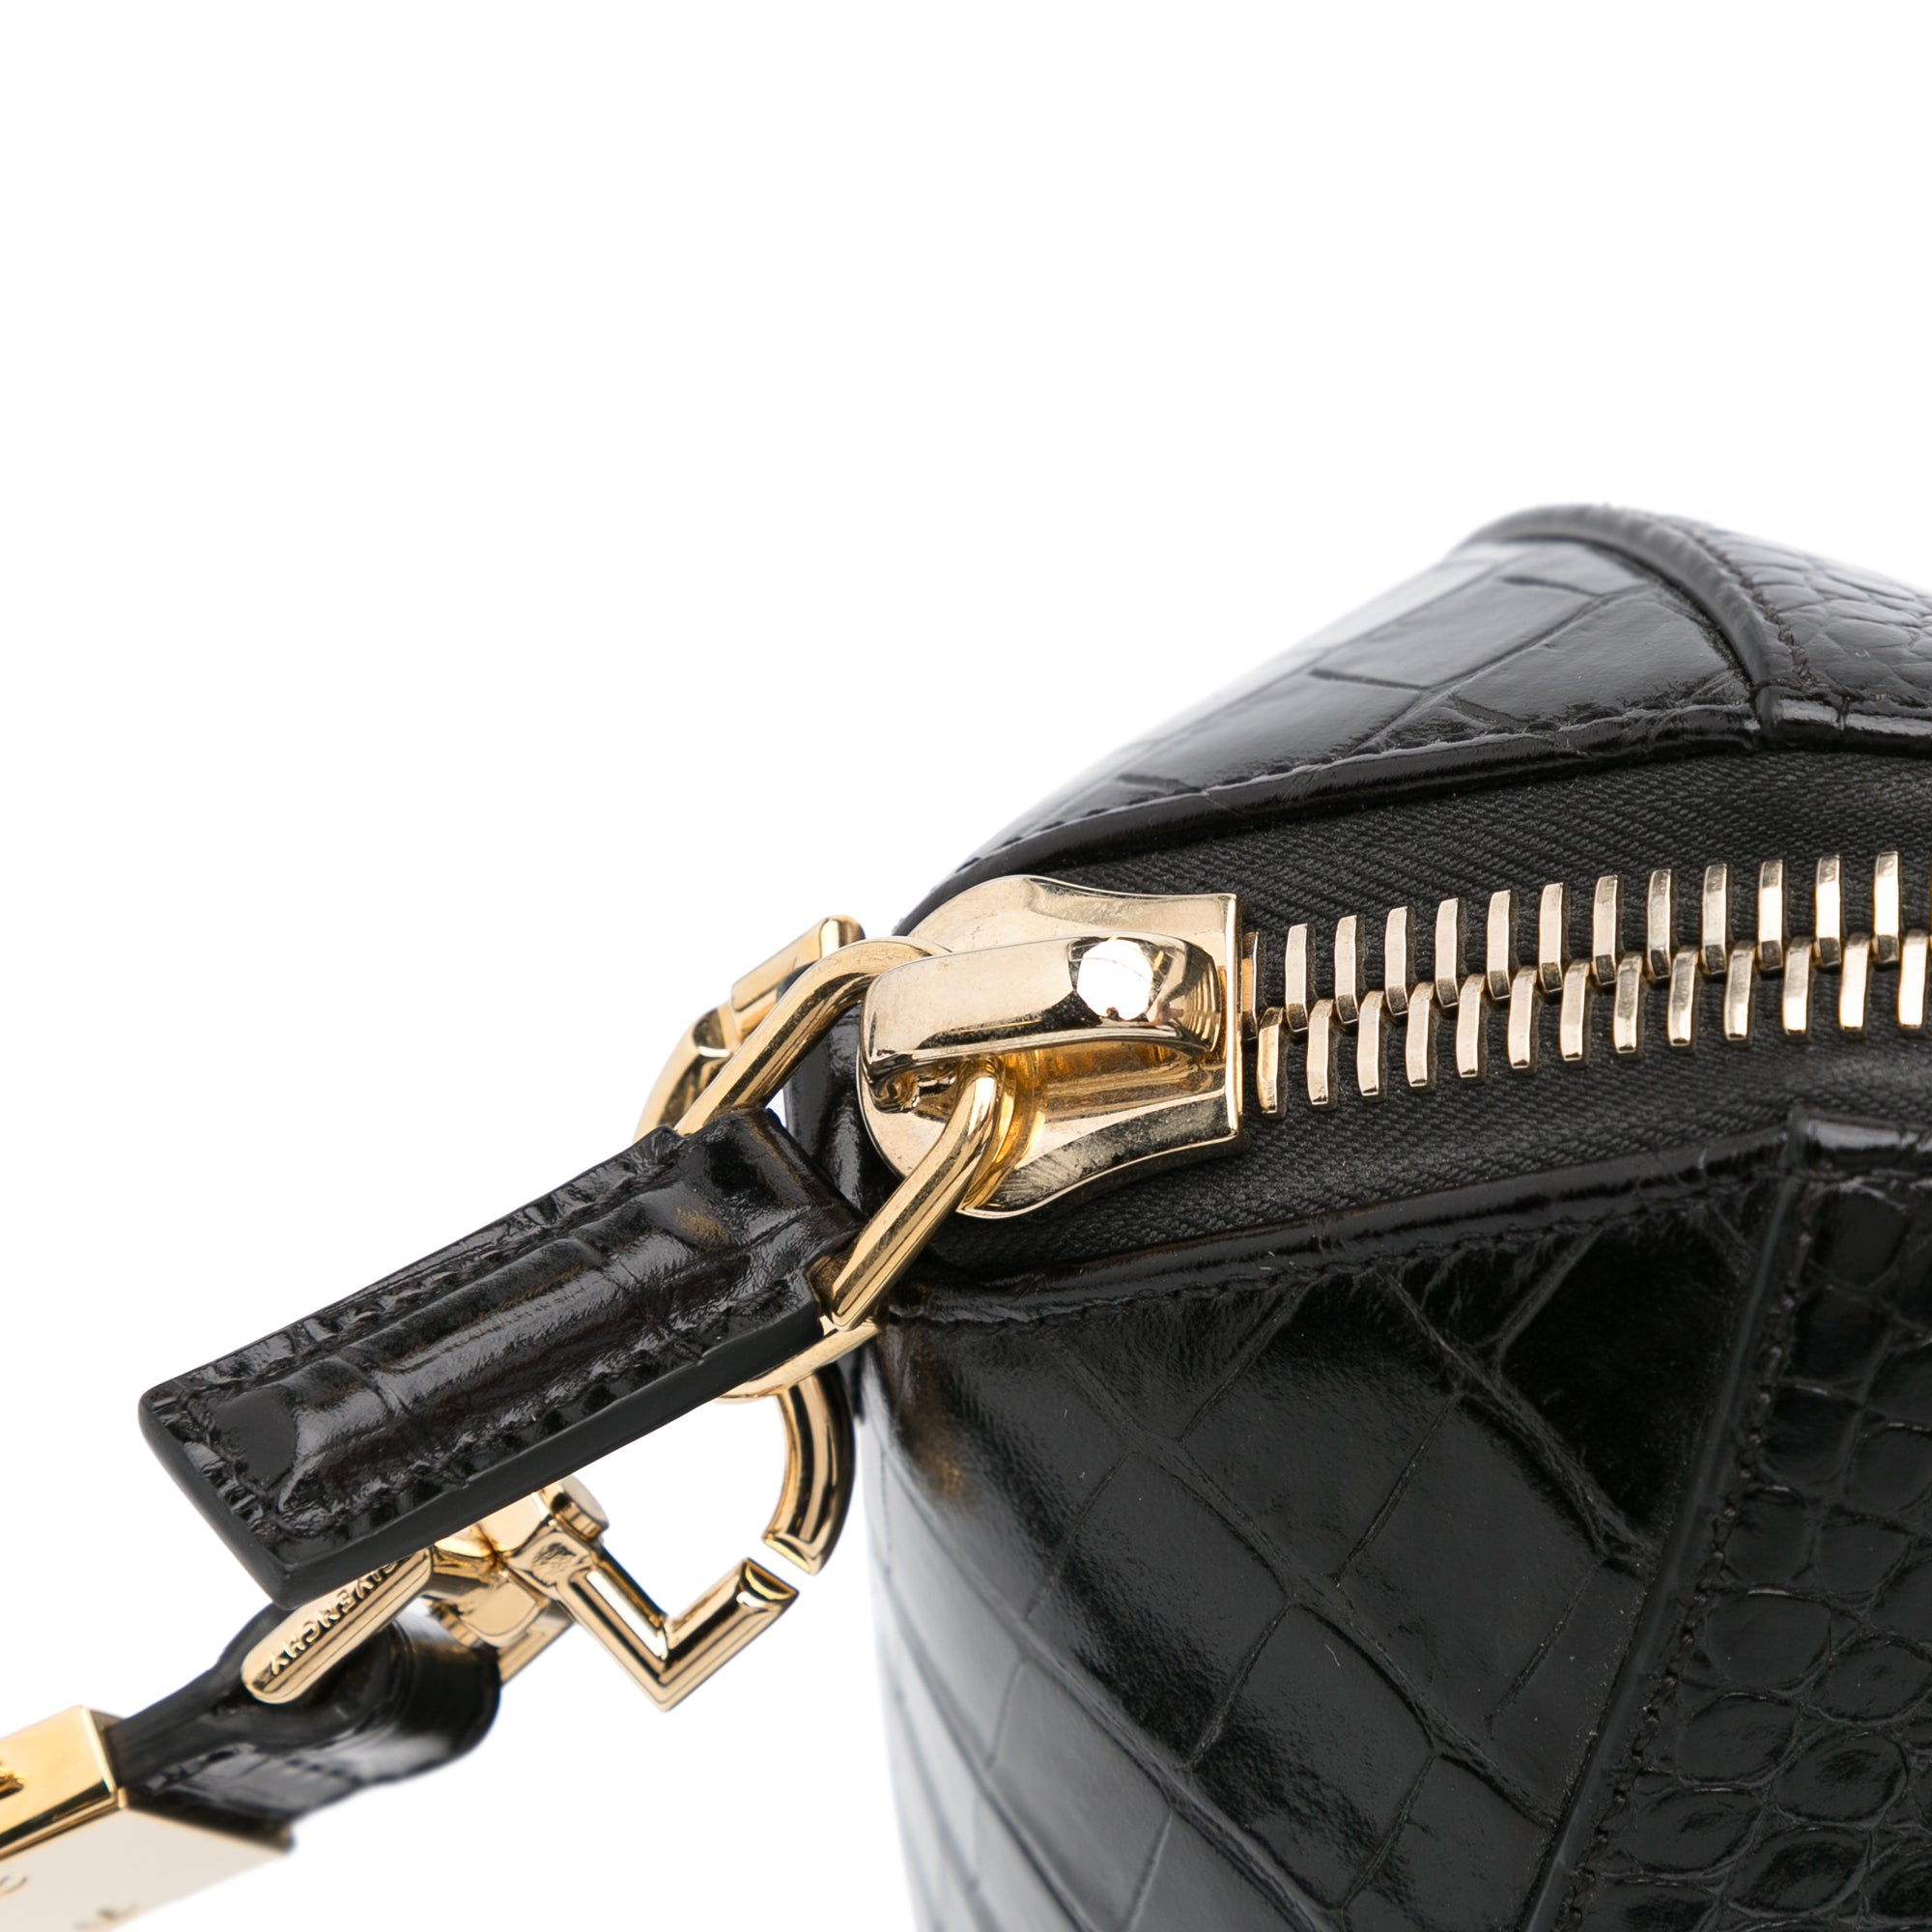 Givenchy Nano Antigona Satchel Bag In Crocodile-embossed Leather